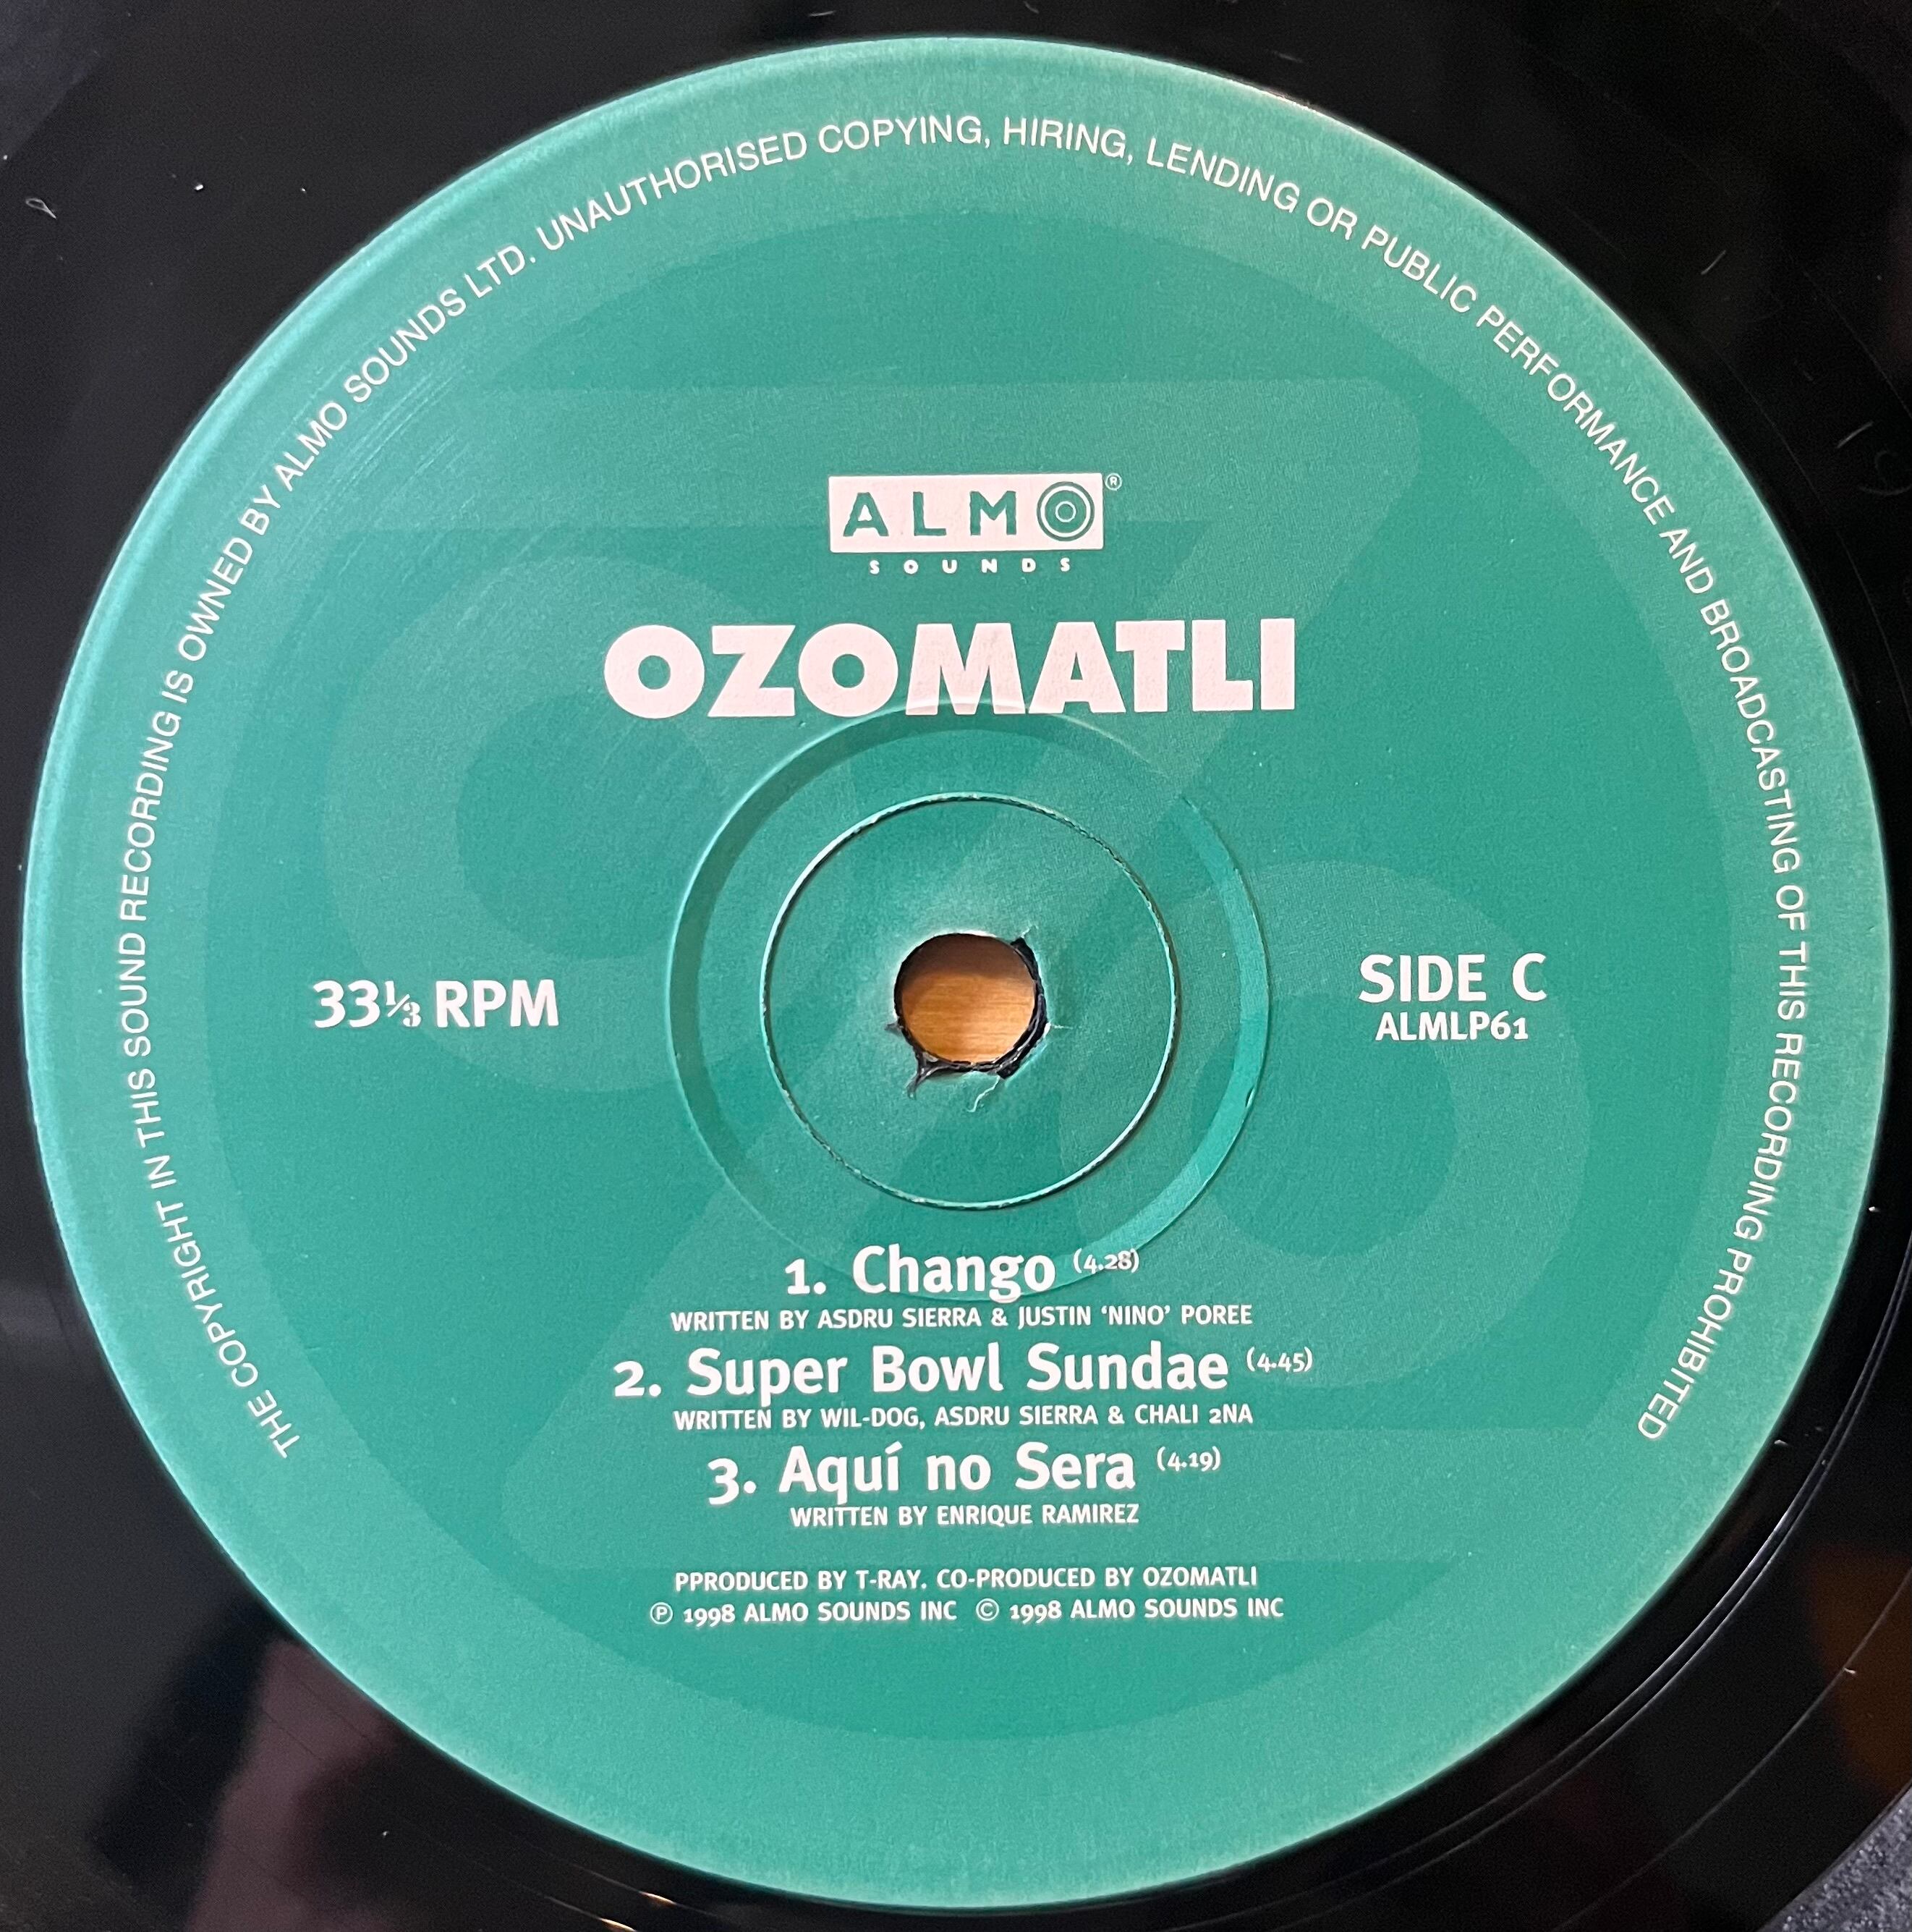 Ozomatli – Ozomatli (2LP) oleo Records